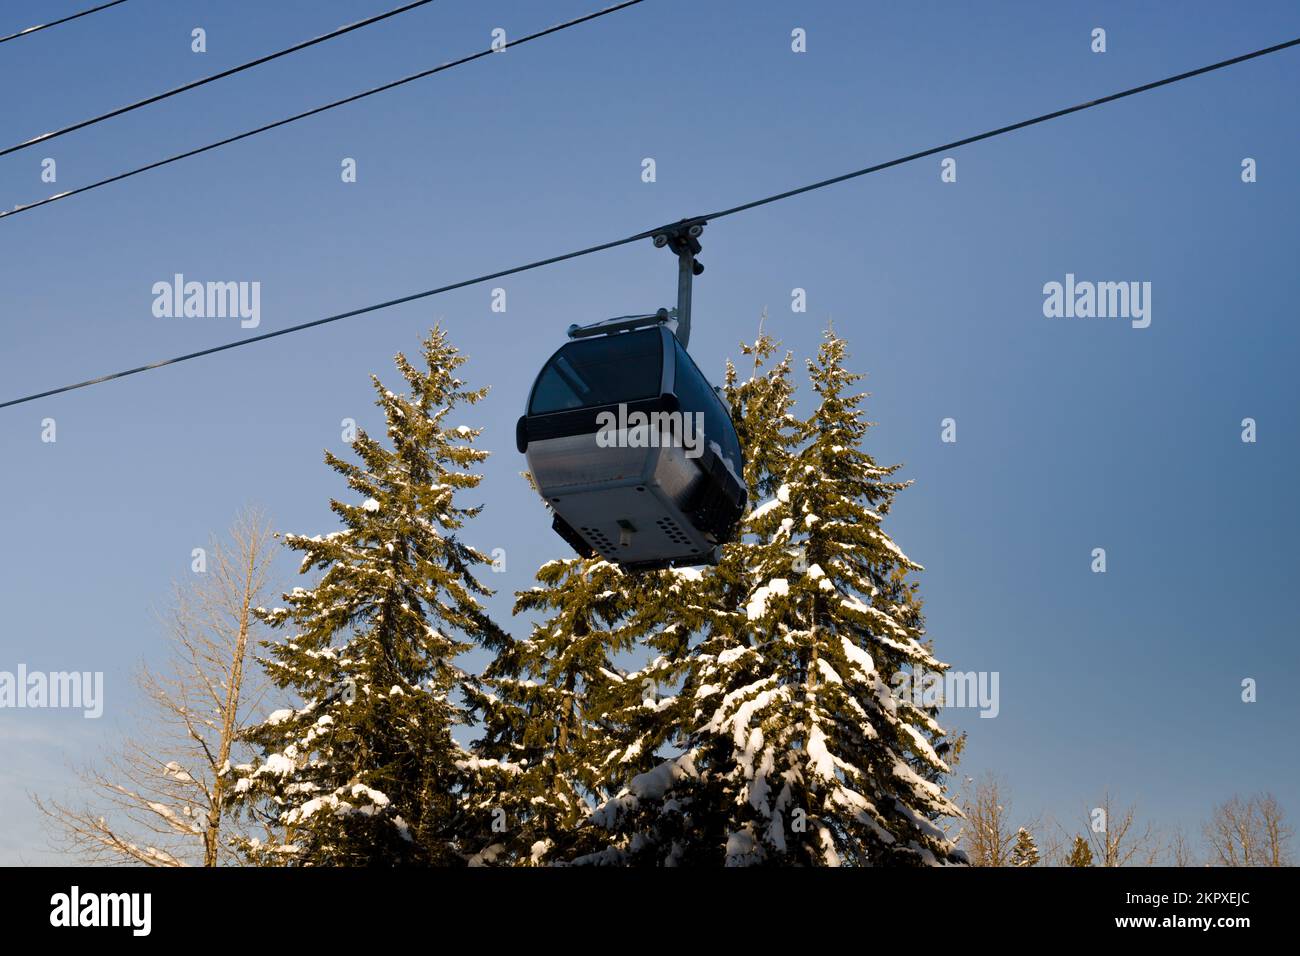 Ski Resort Winter Season Sky Gondola Ski Lift Snowboarding Sunny Day Pure Snow Forest